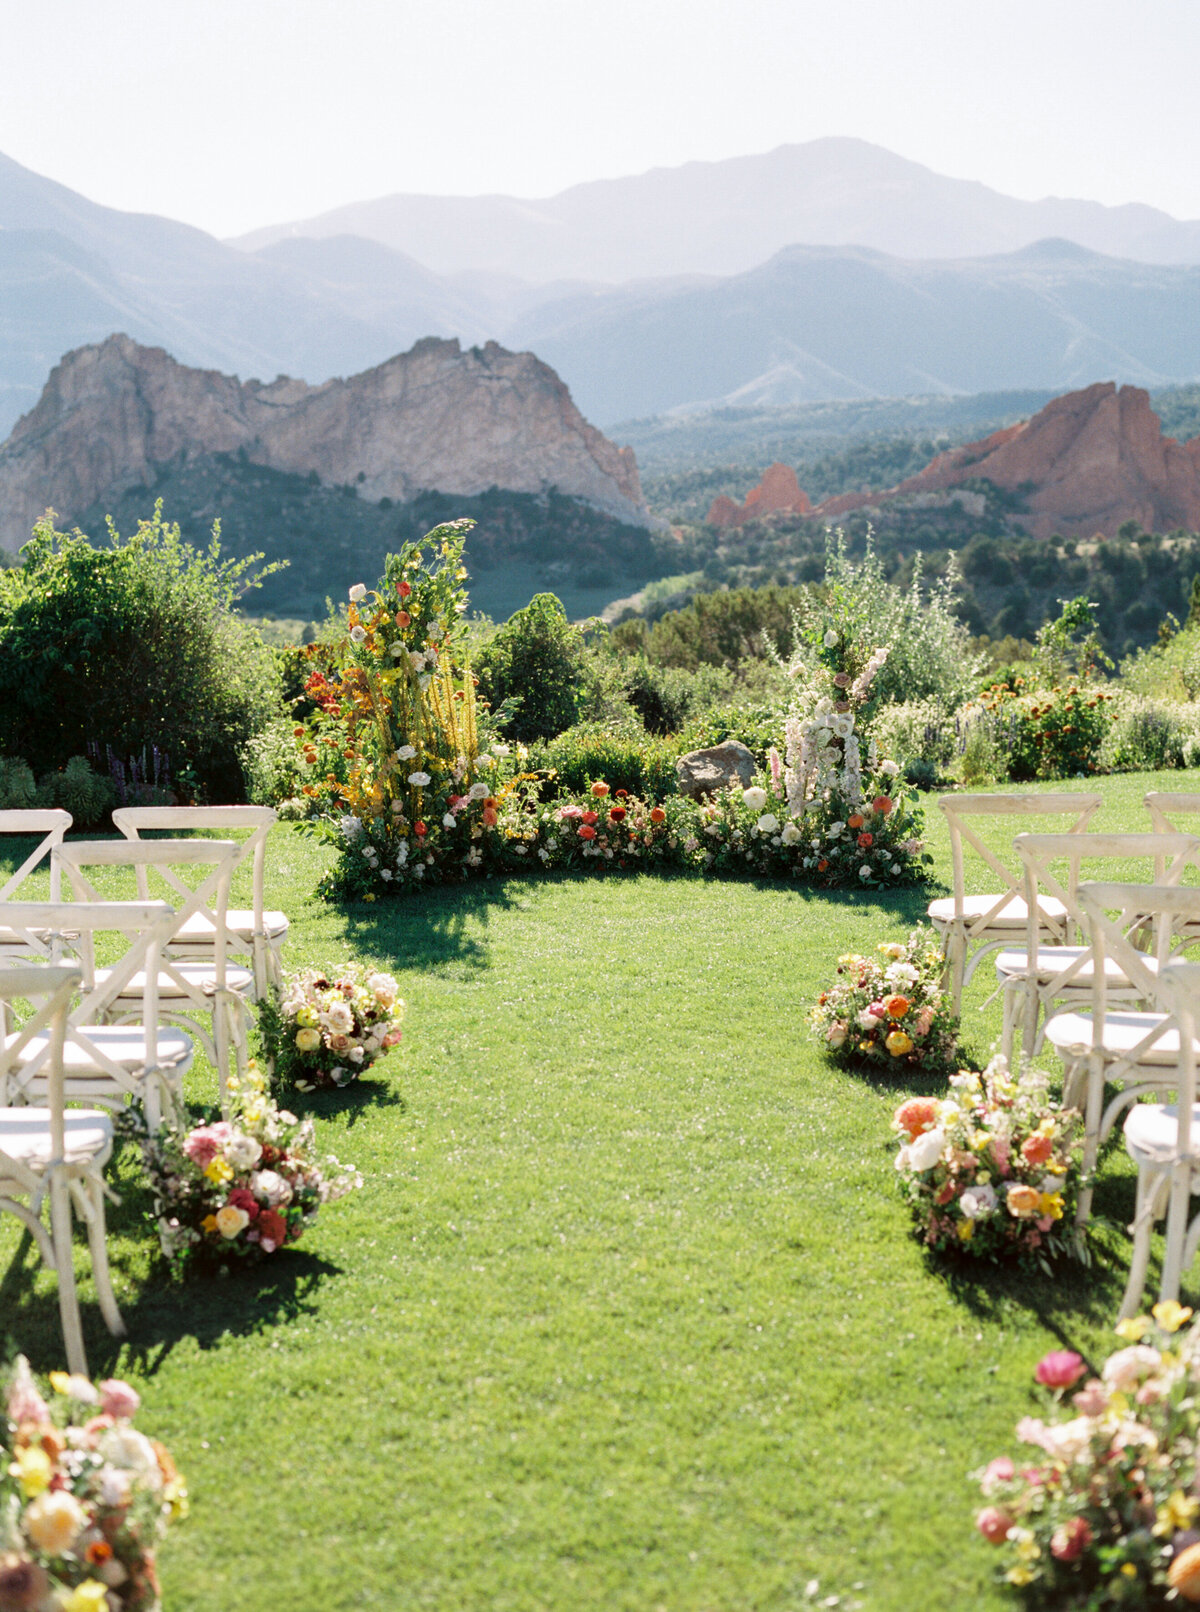 Carlos-Hernandez-Photography-Young-and-Michael-Wedding-Garden-of-the-Gods-Resort-Colorado-Springs-0338-Edit (2)